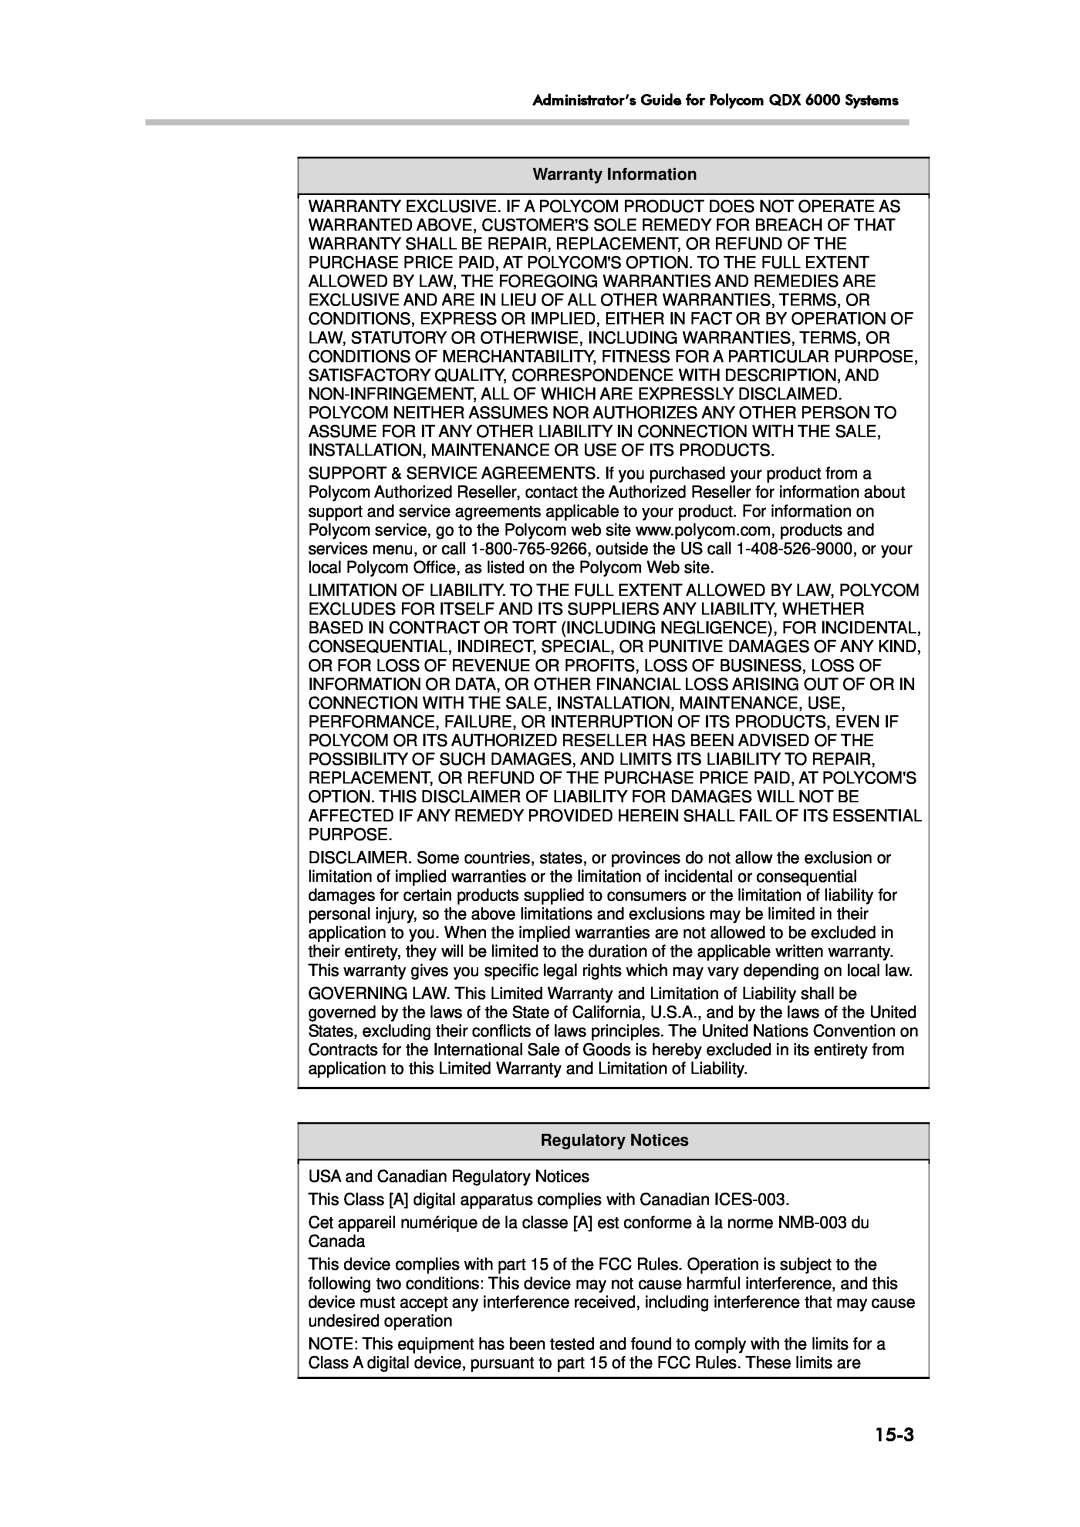 Polycom 6000 manual 15-3, USA and Canadian Regulatory Notices 